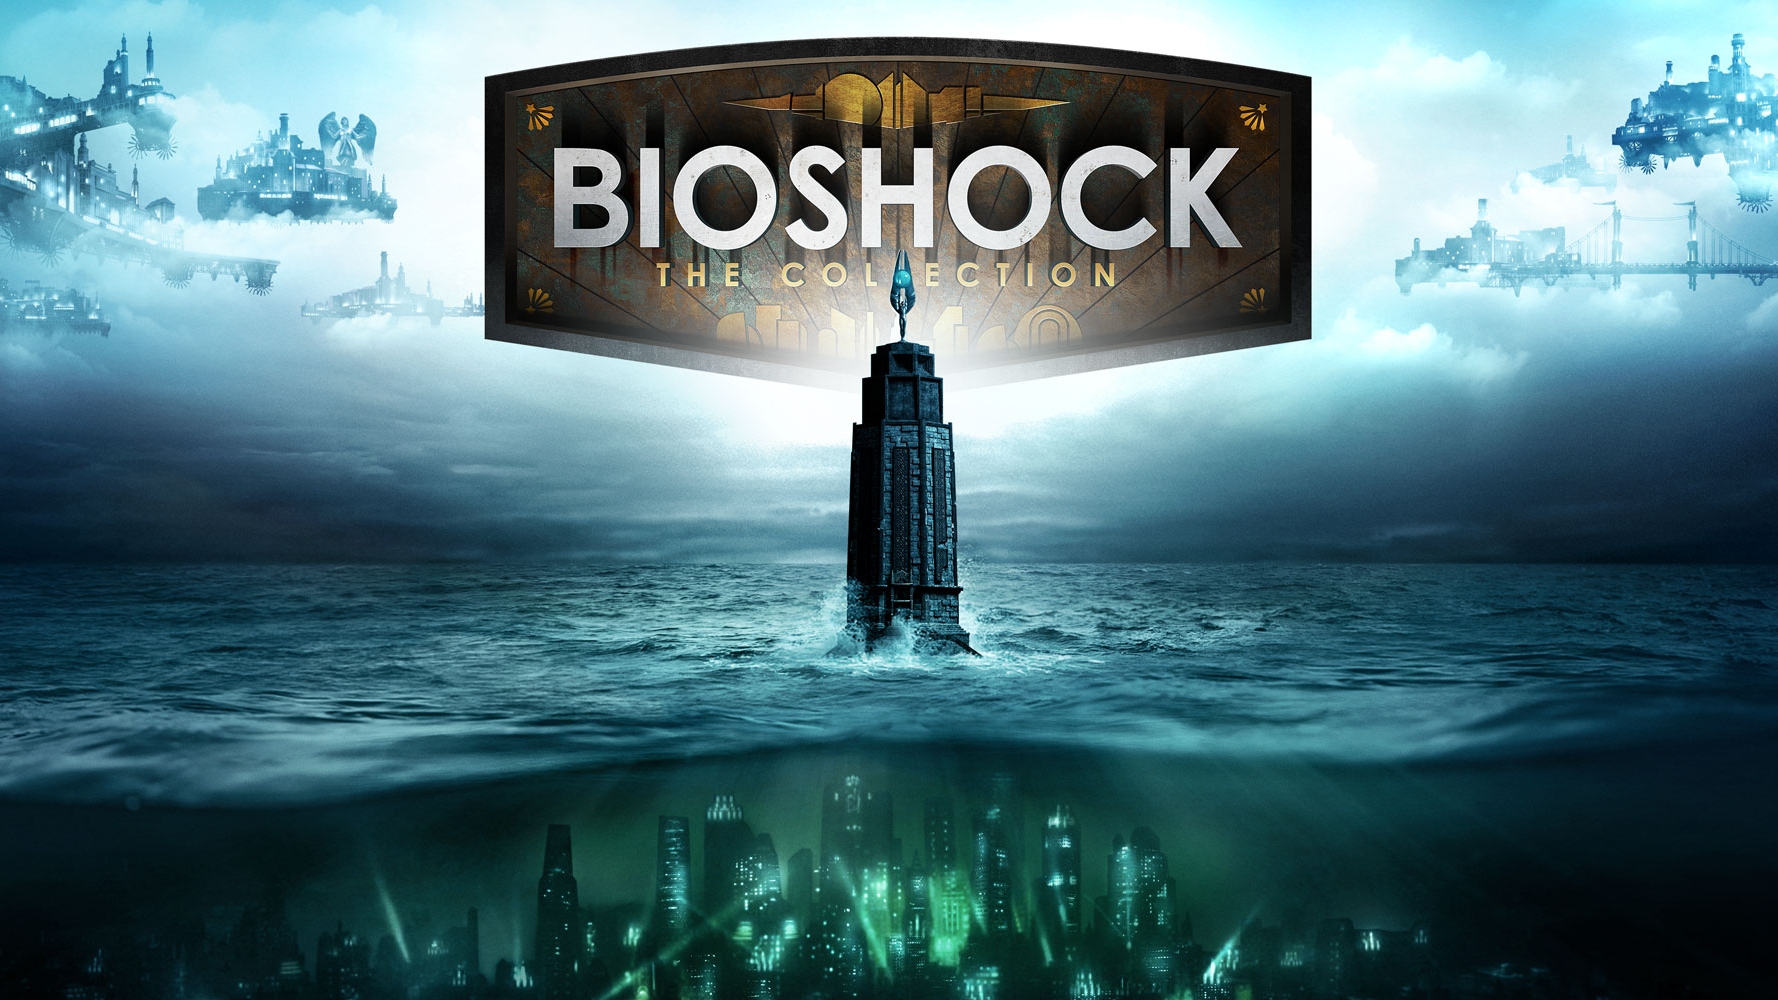 bioshock remastered xbox one